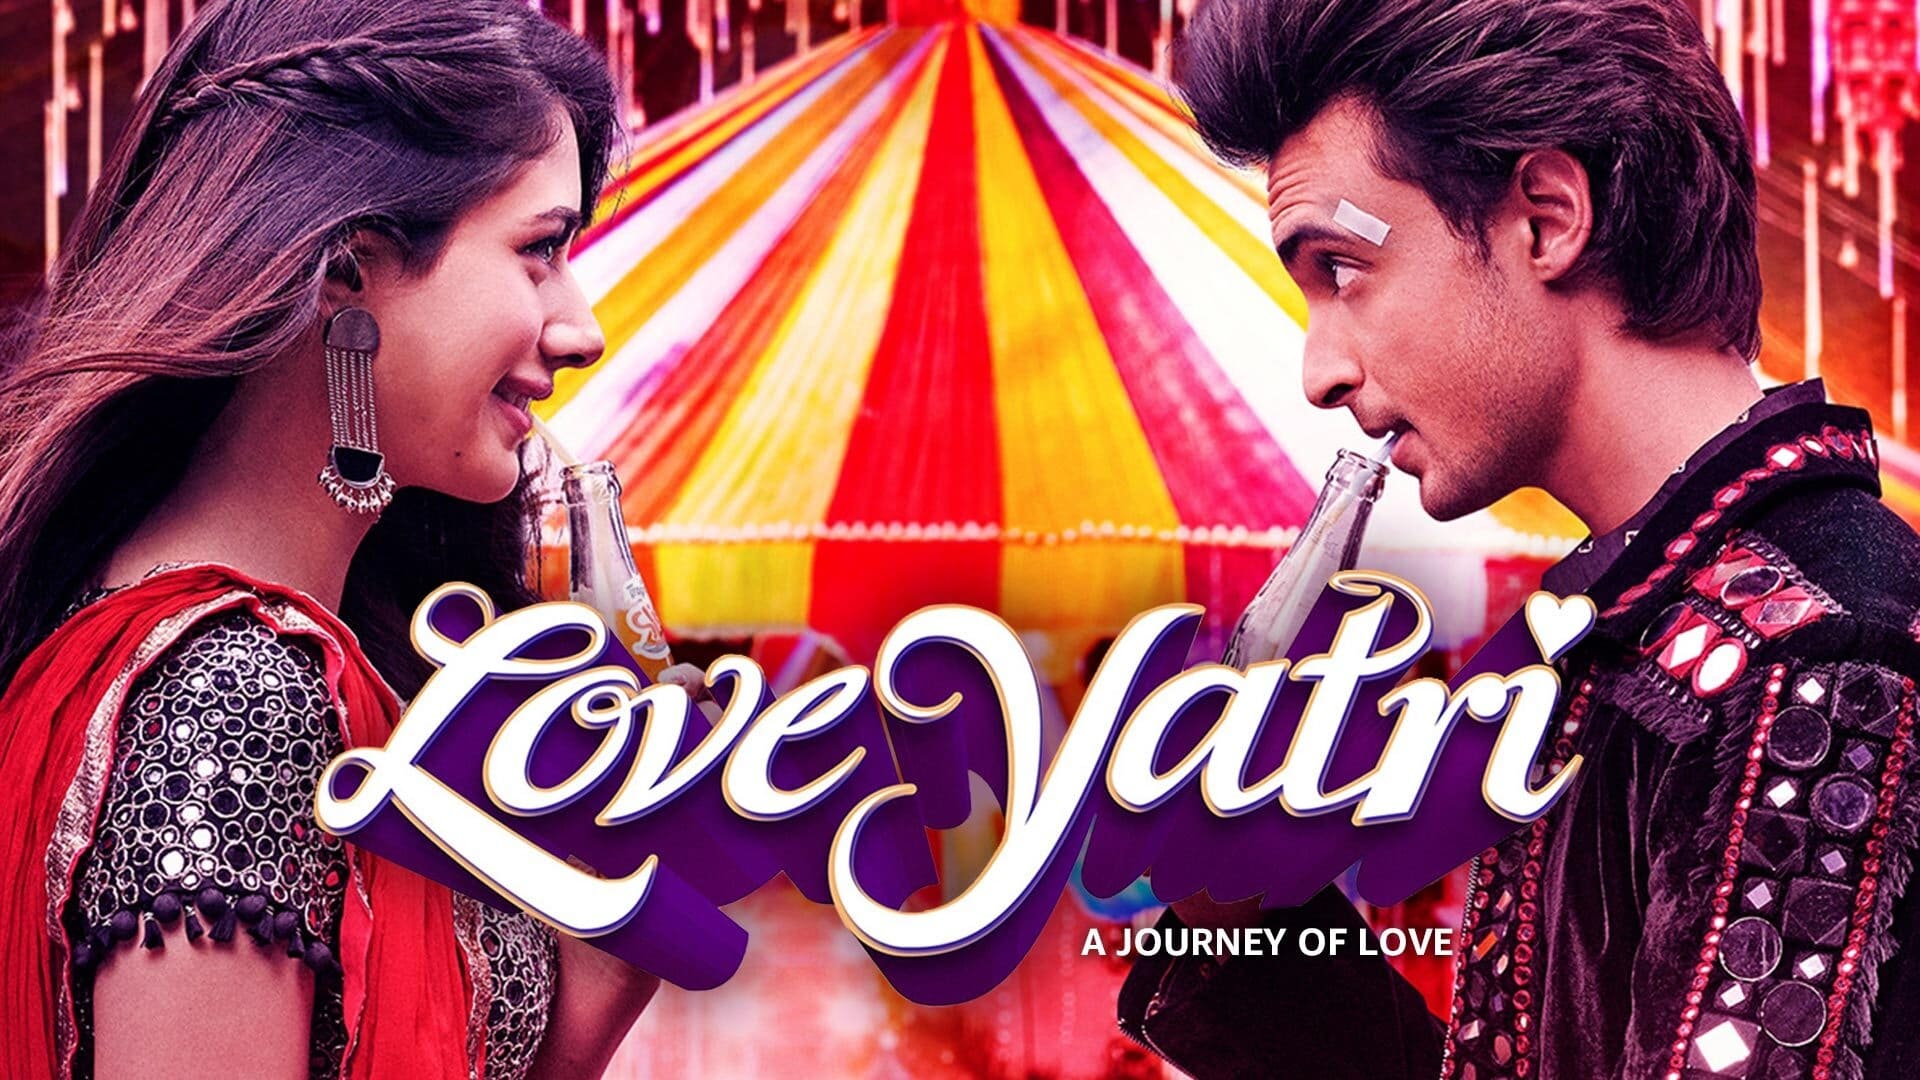 loveyatri journey of love full movie